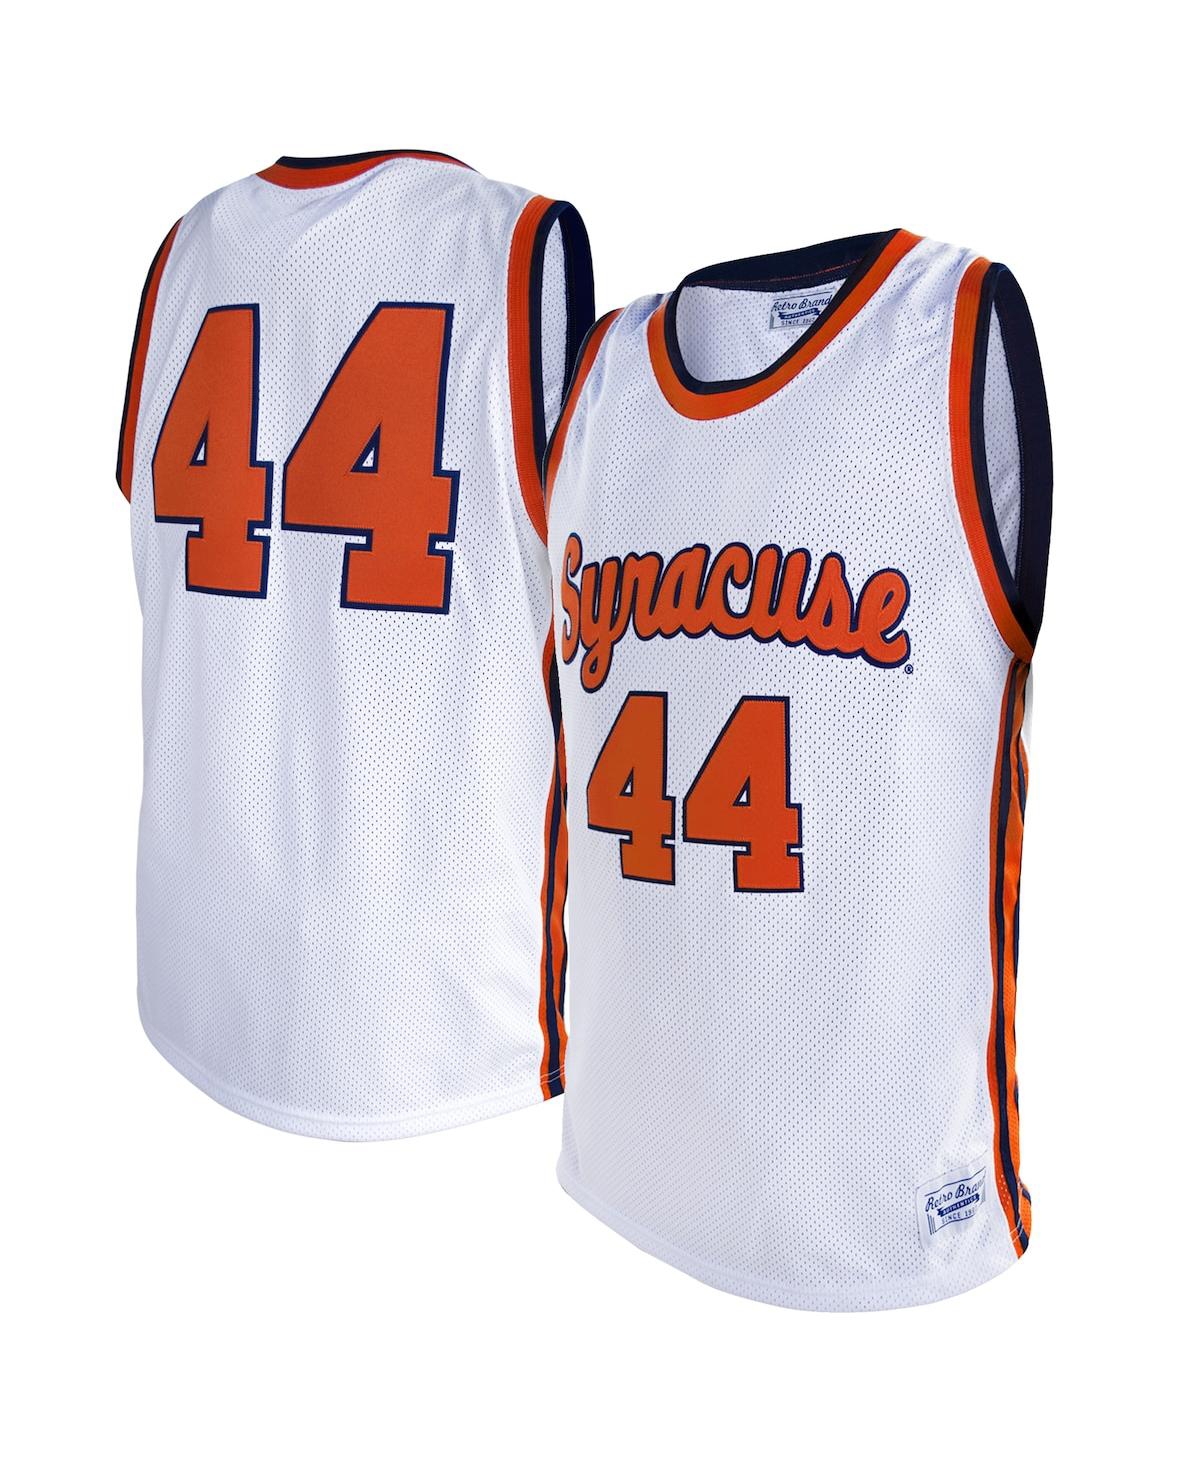 Men's Original Retro Brand #44 White Syracuse Orange Alumni Basketball Jersey - White